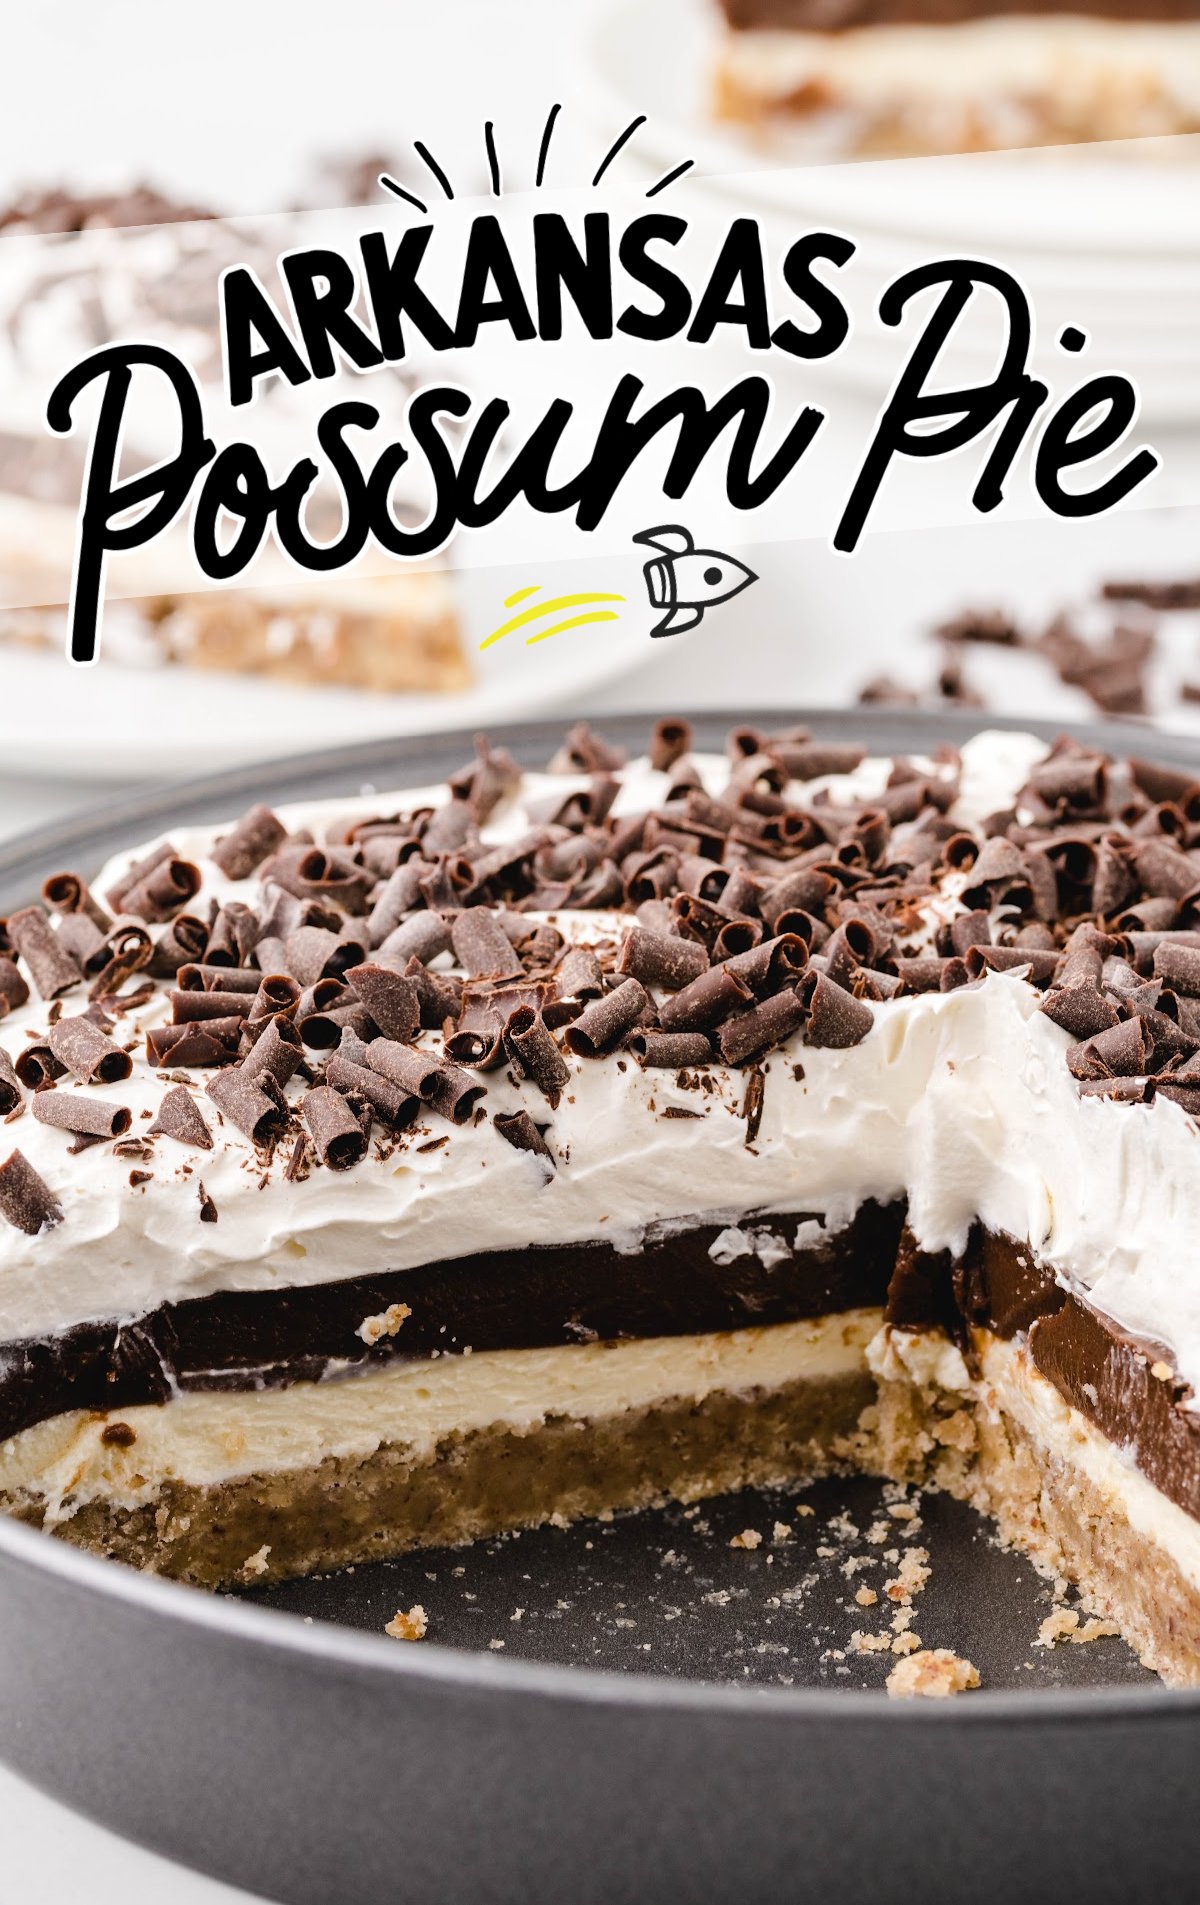 a dish of Arkansas Possum Pie topped with chocolate shavings